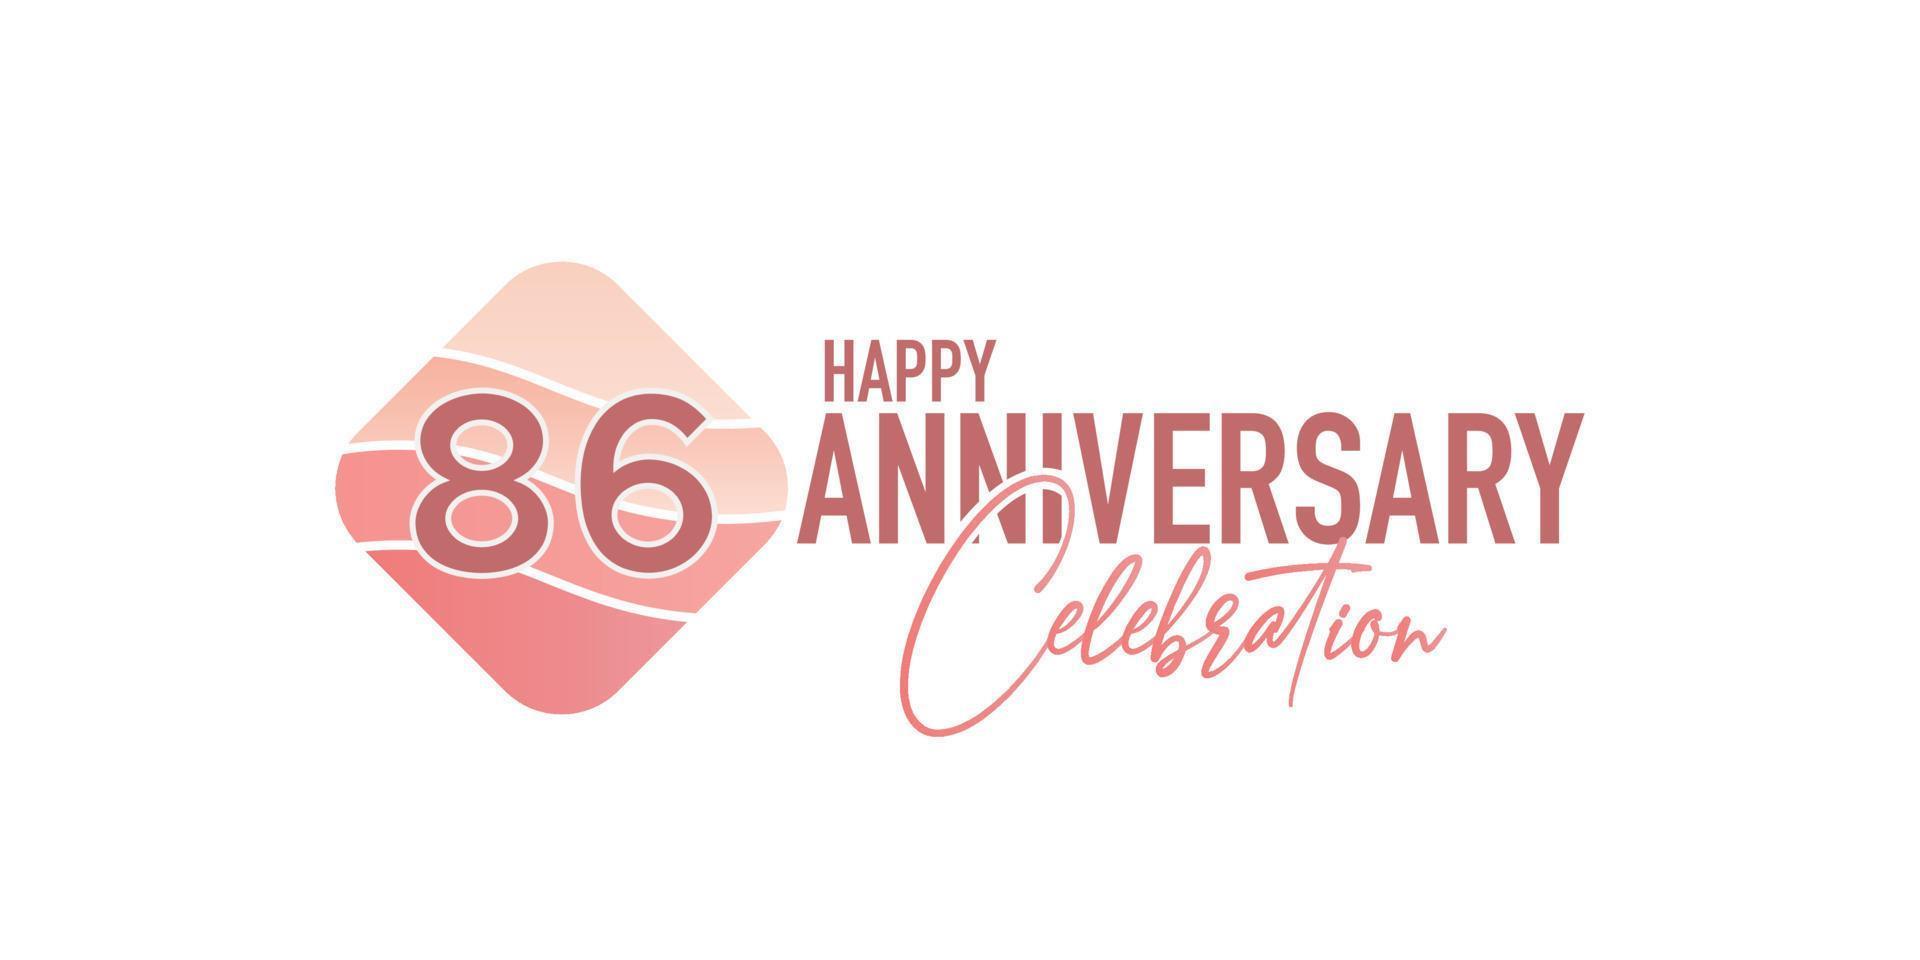 86 years anniversary logo vector illustration design celebration with pink geometric design